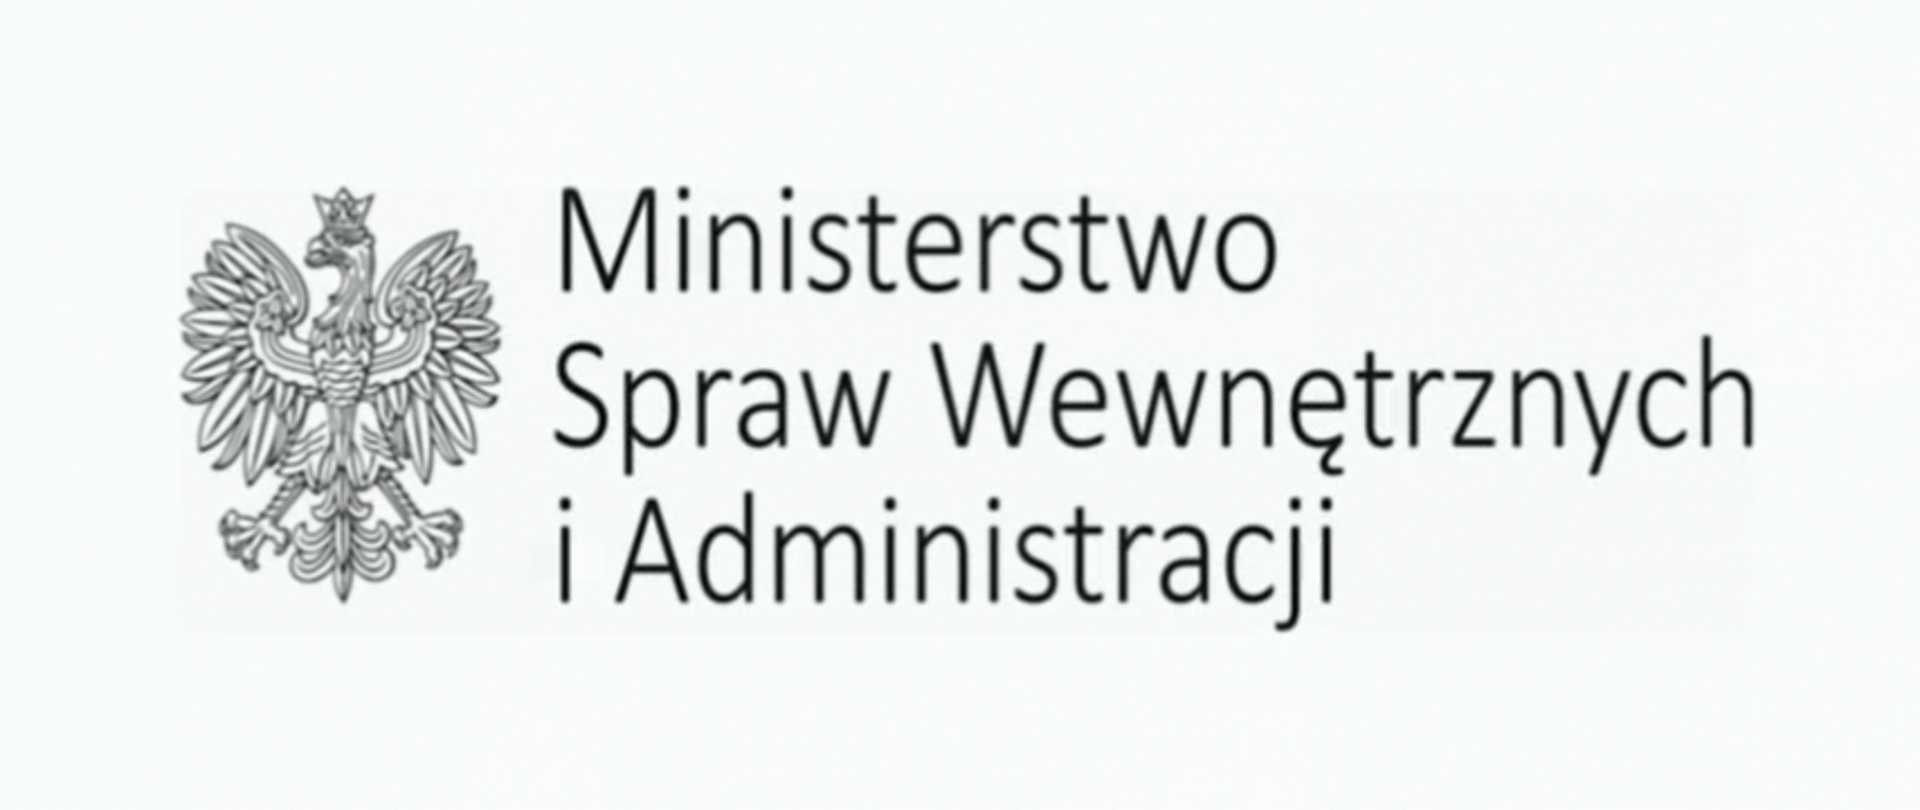 Logo MSWiA